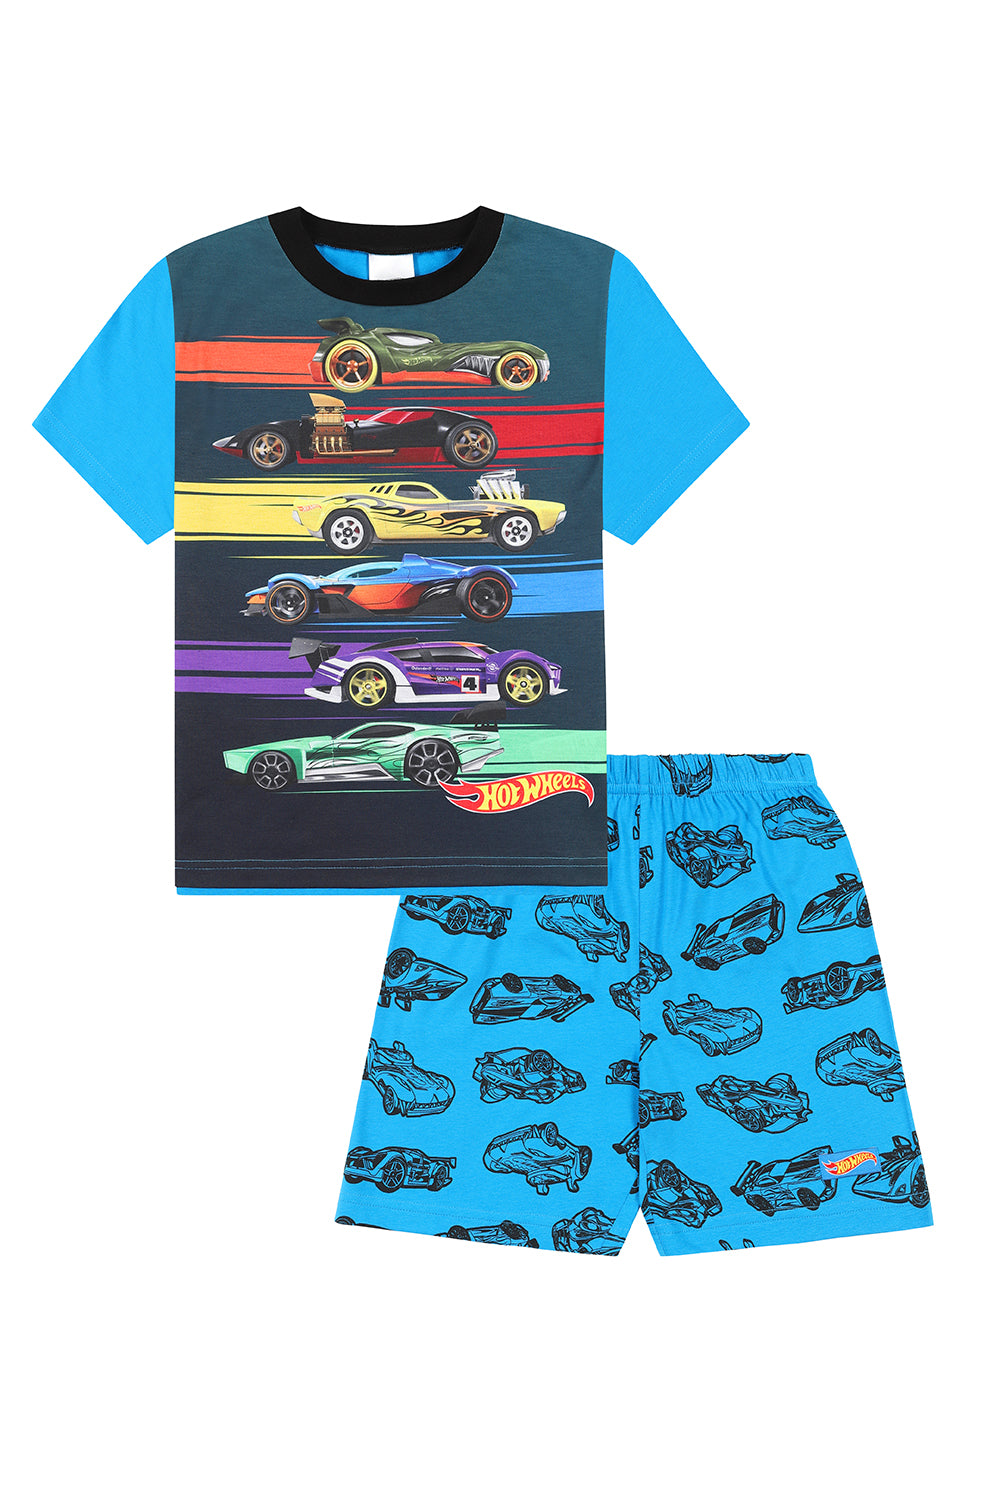 Boys Hot Wheels Cars Blue Short Pyjamas